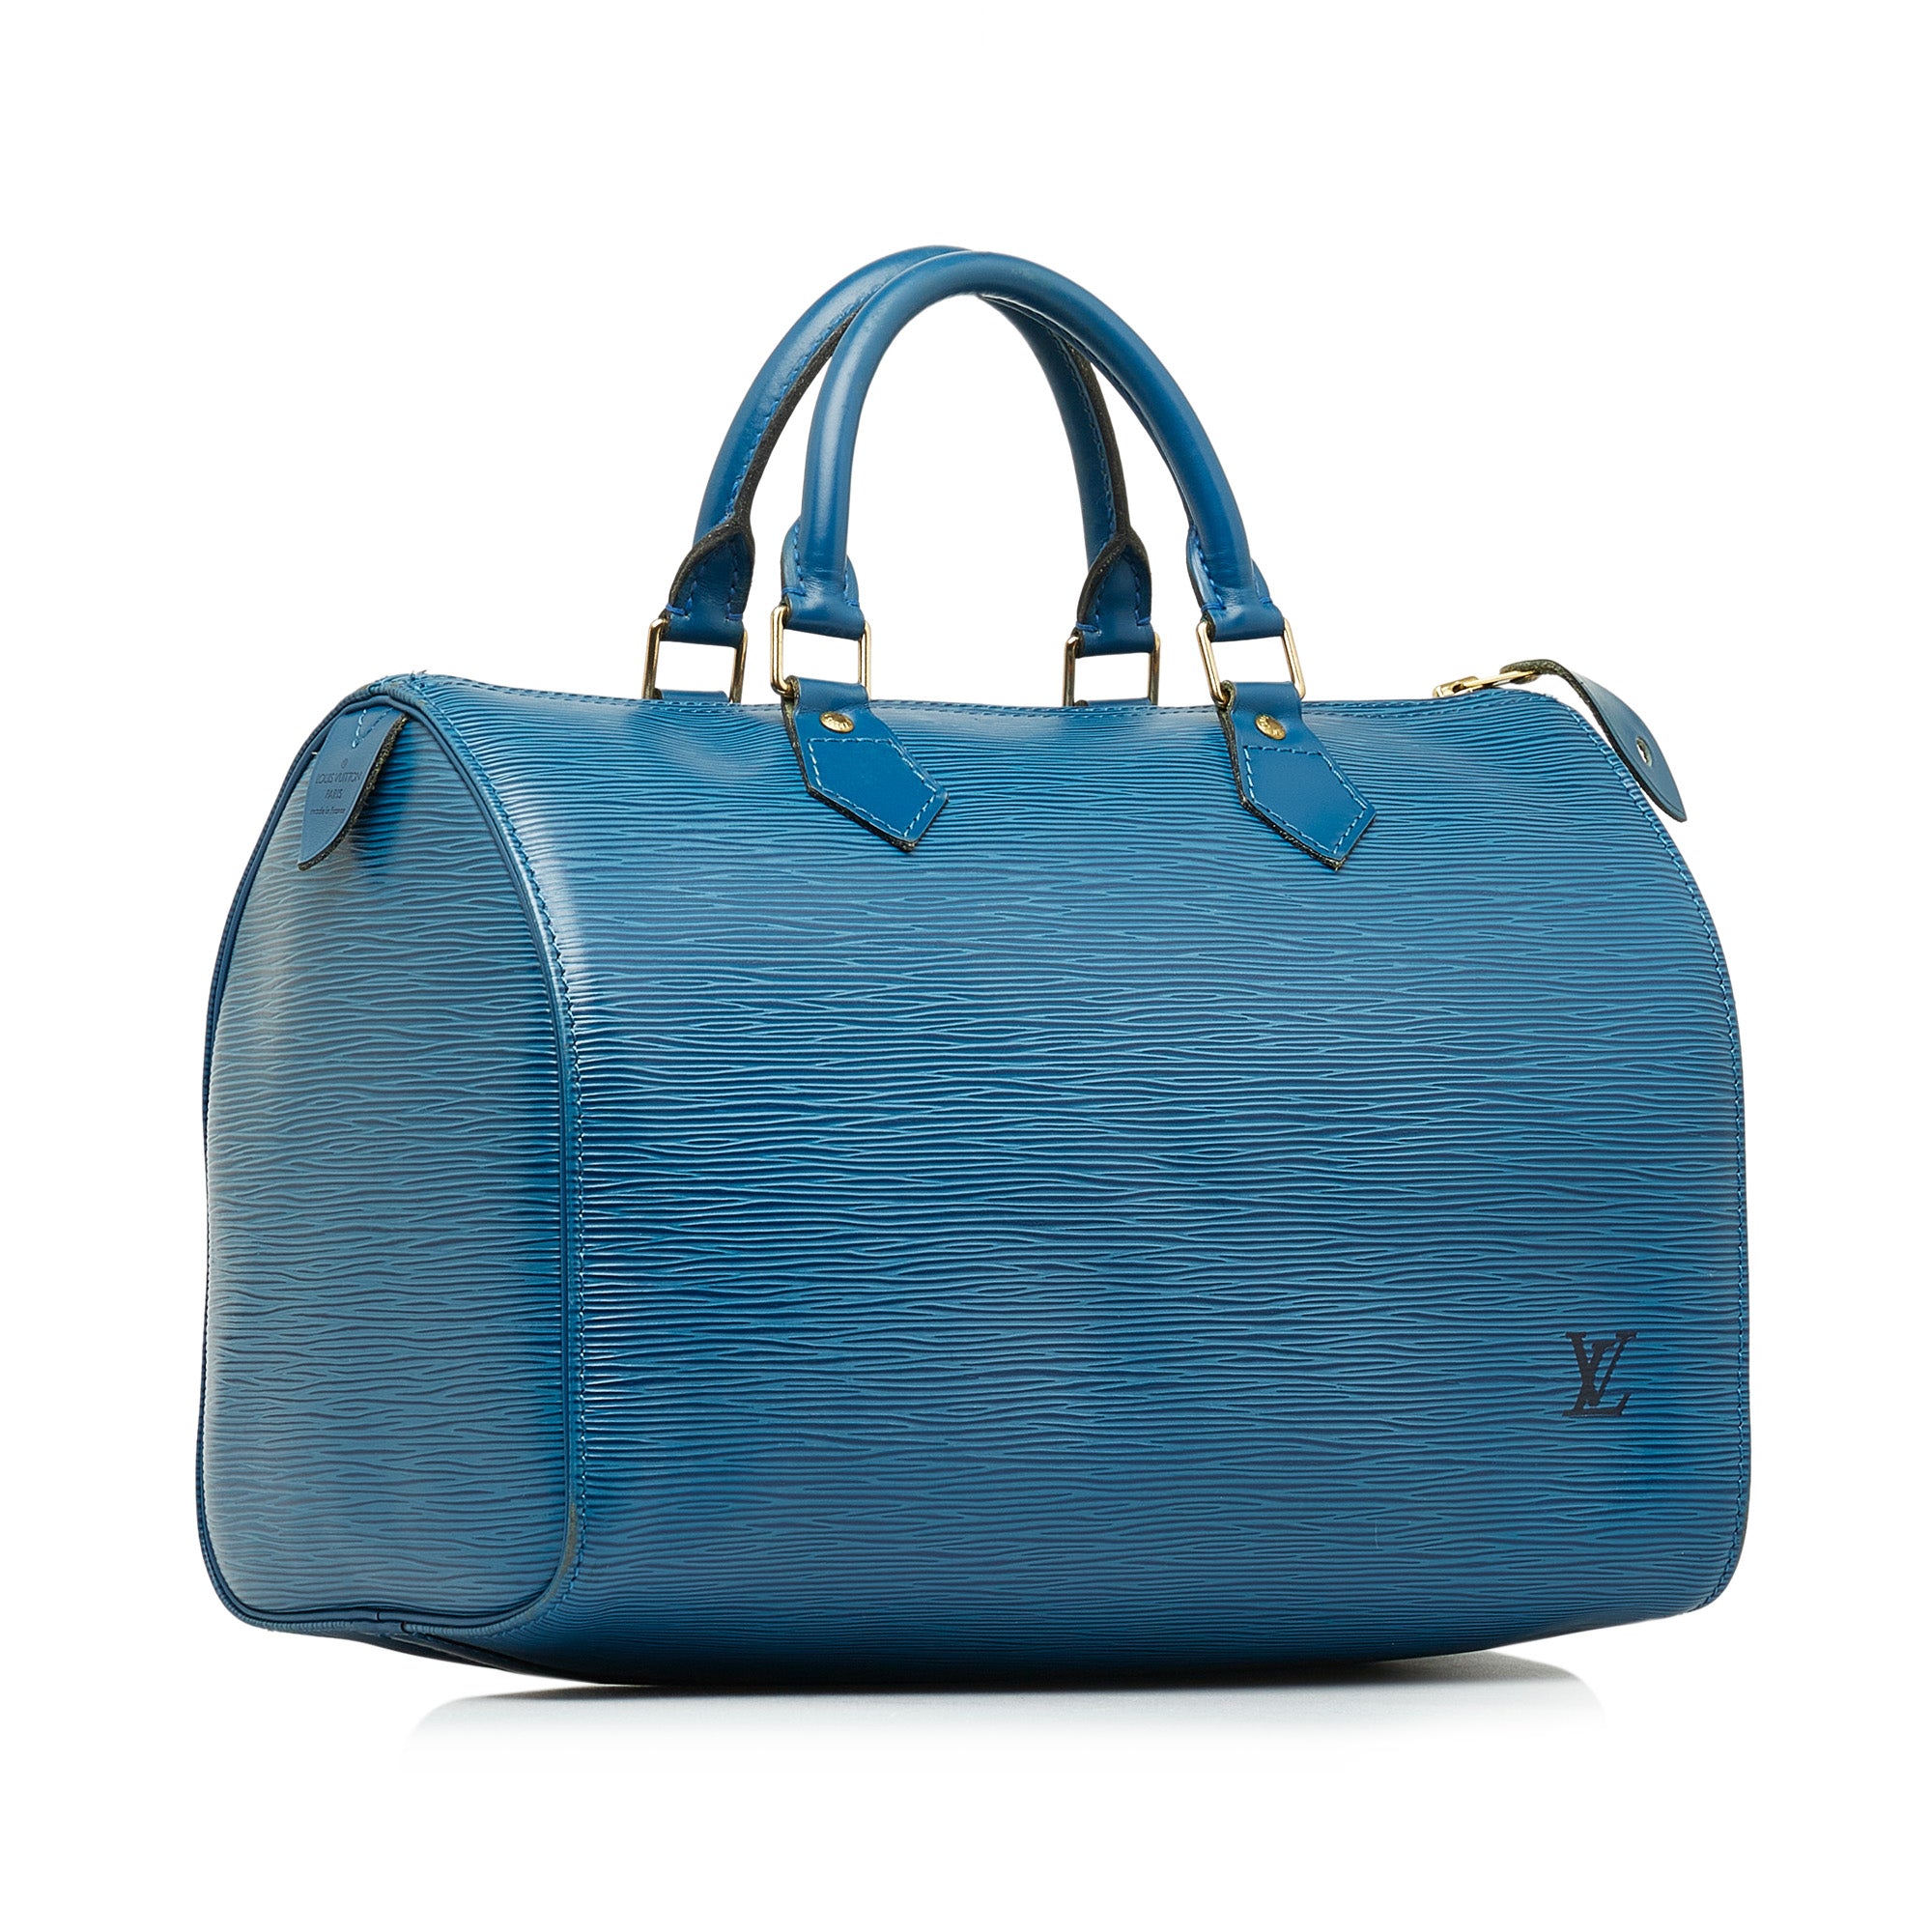 Louis Vuitton Speedy 25 Epi Blue Satchel Handbag